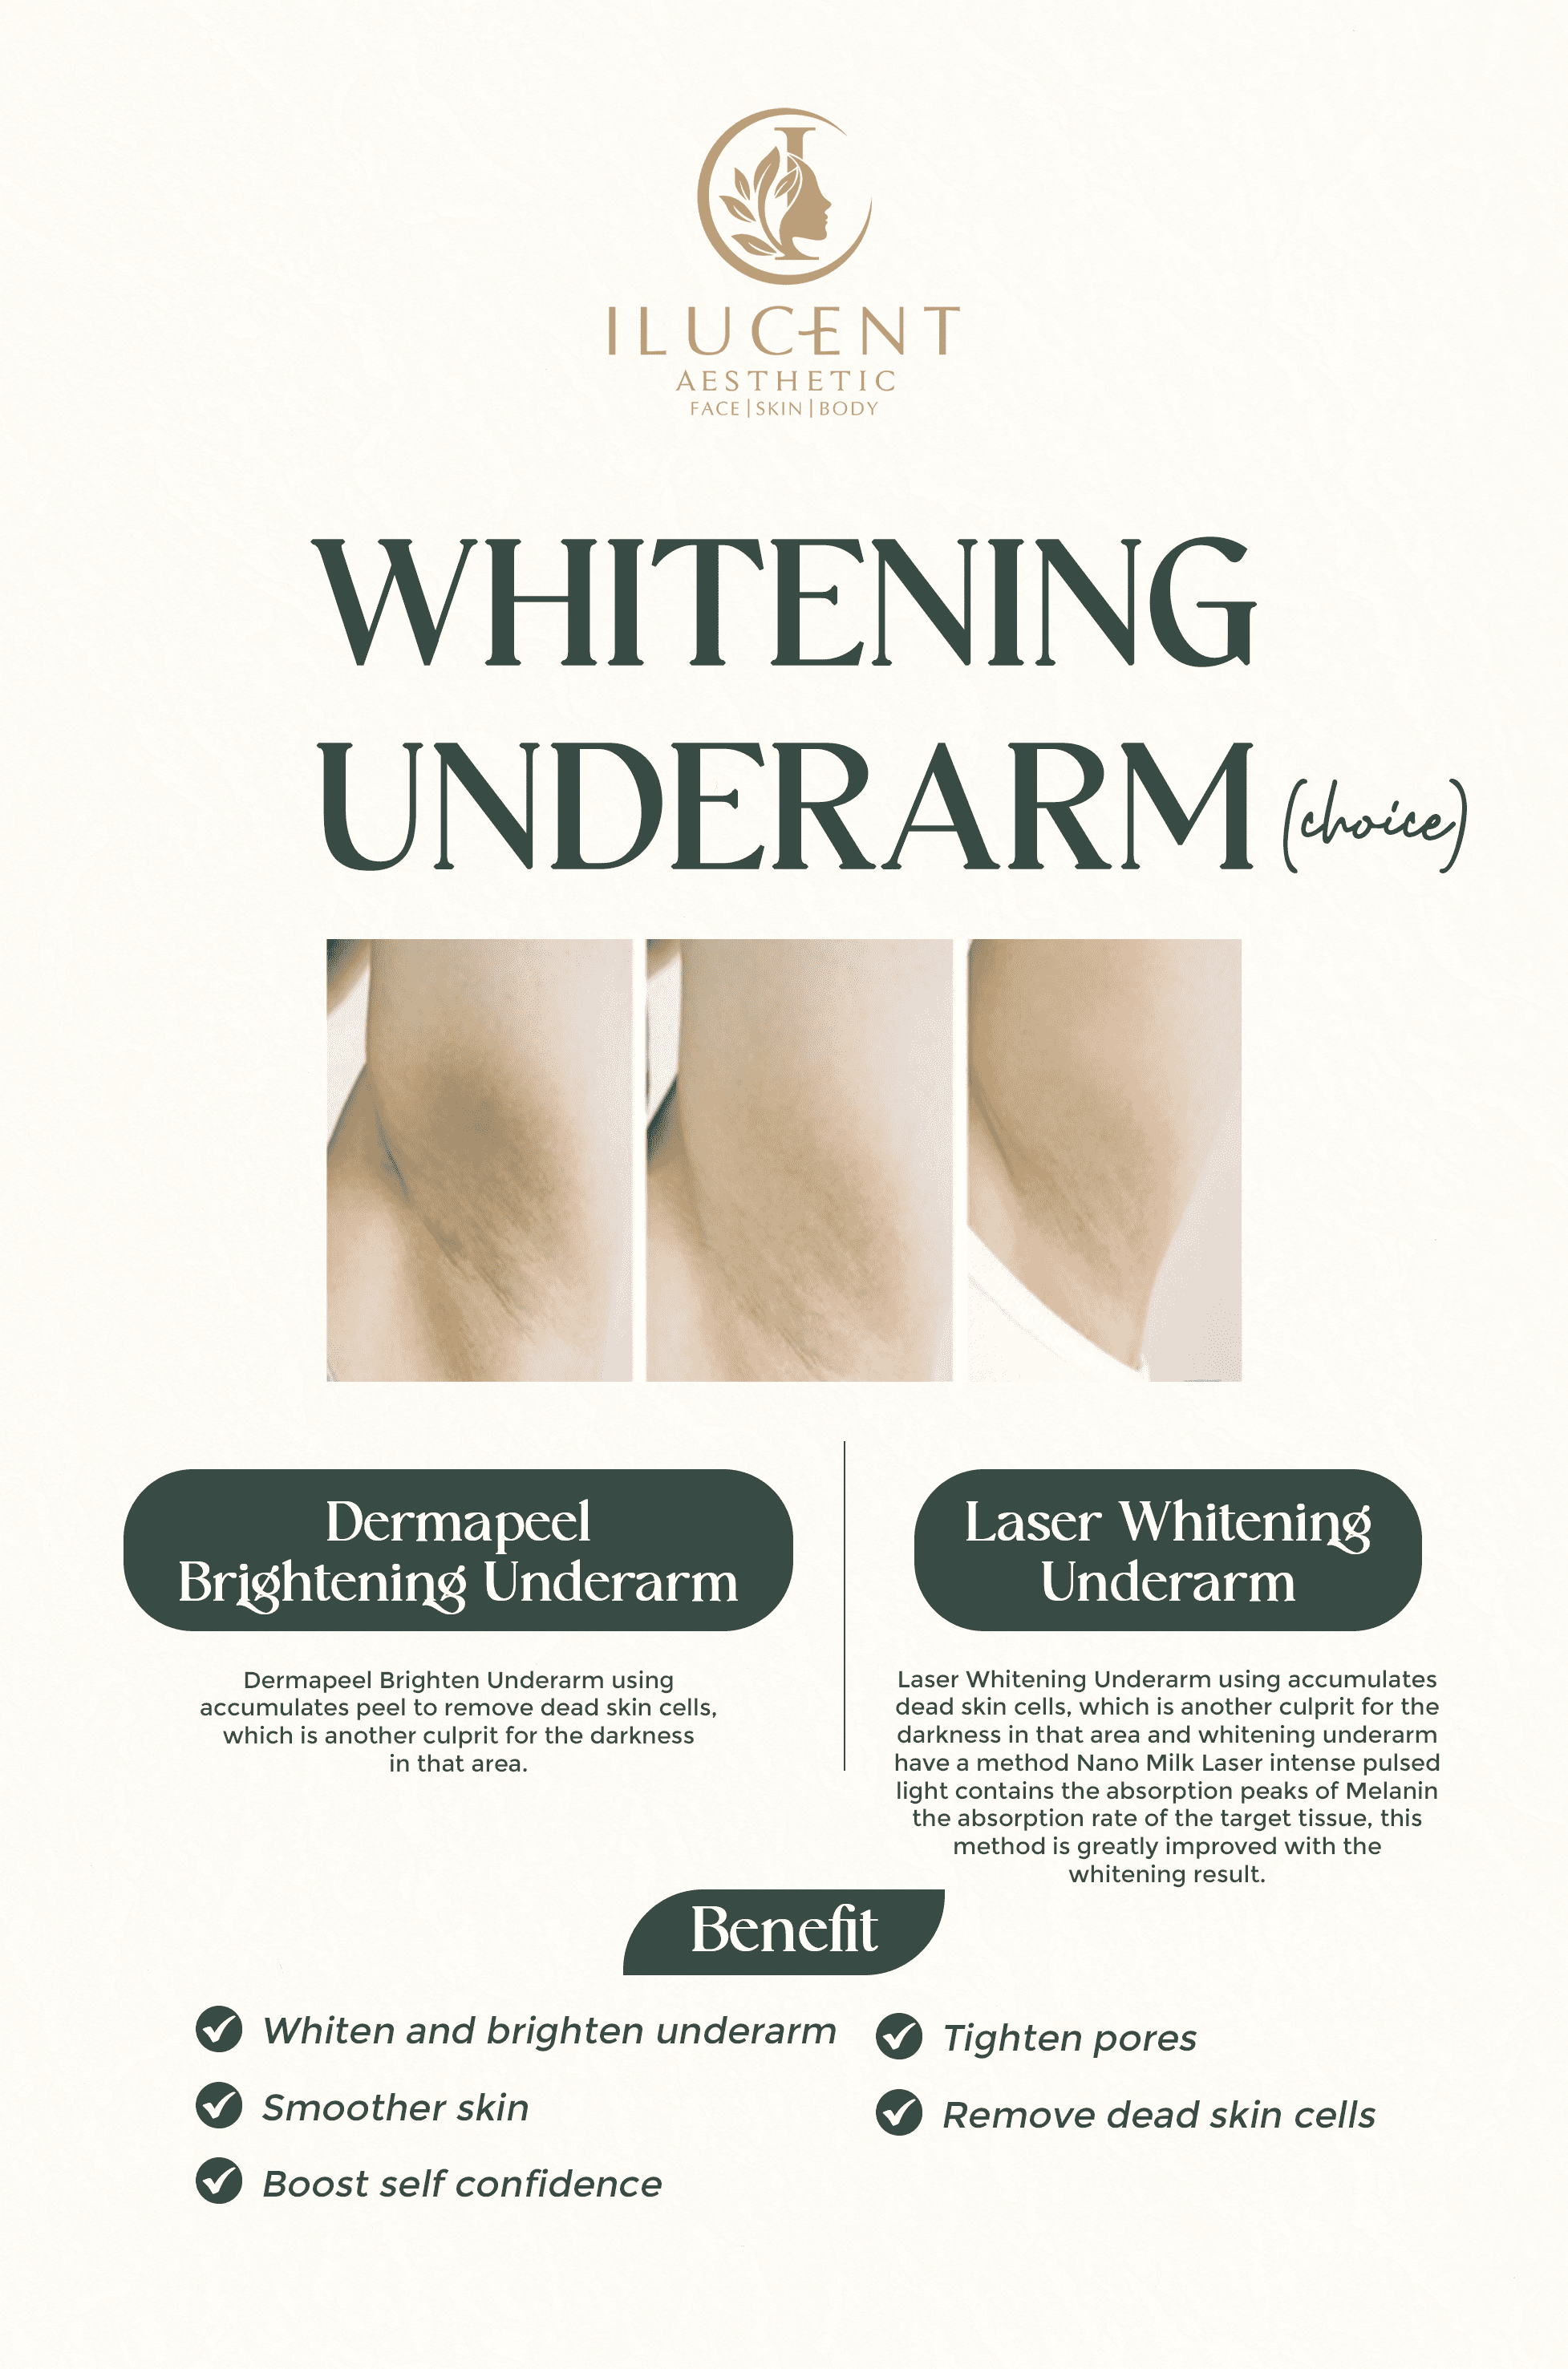 Whitening Underarm (Choice)